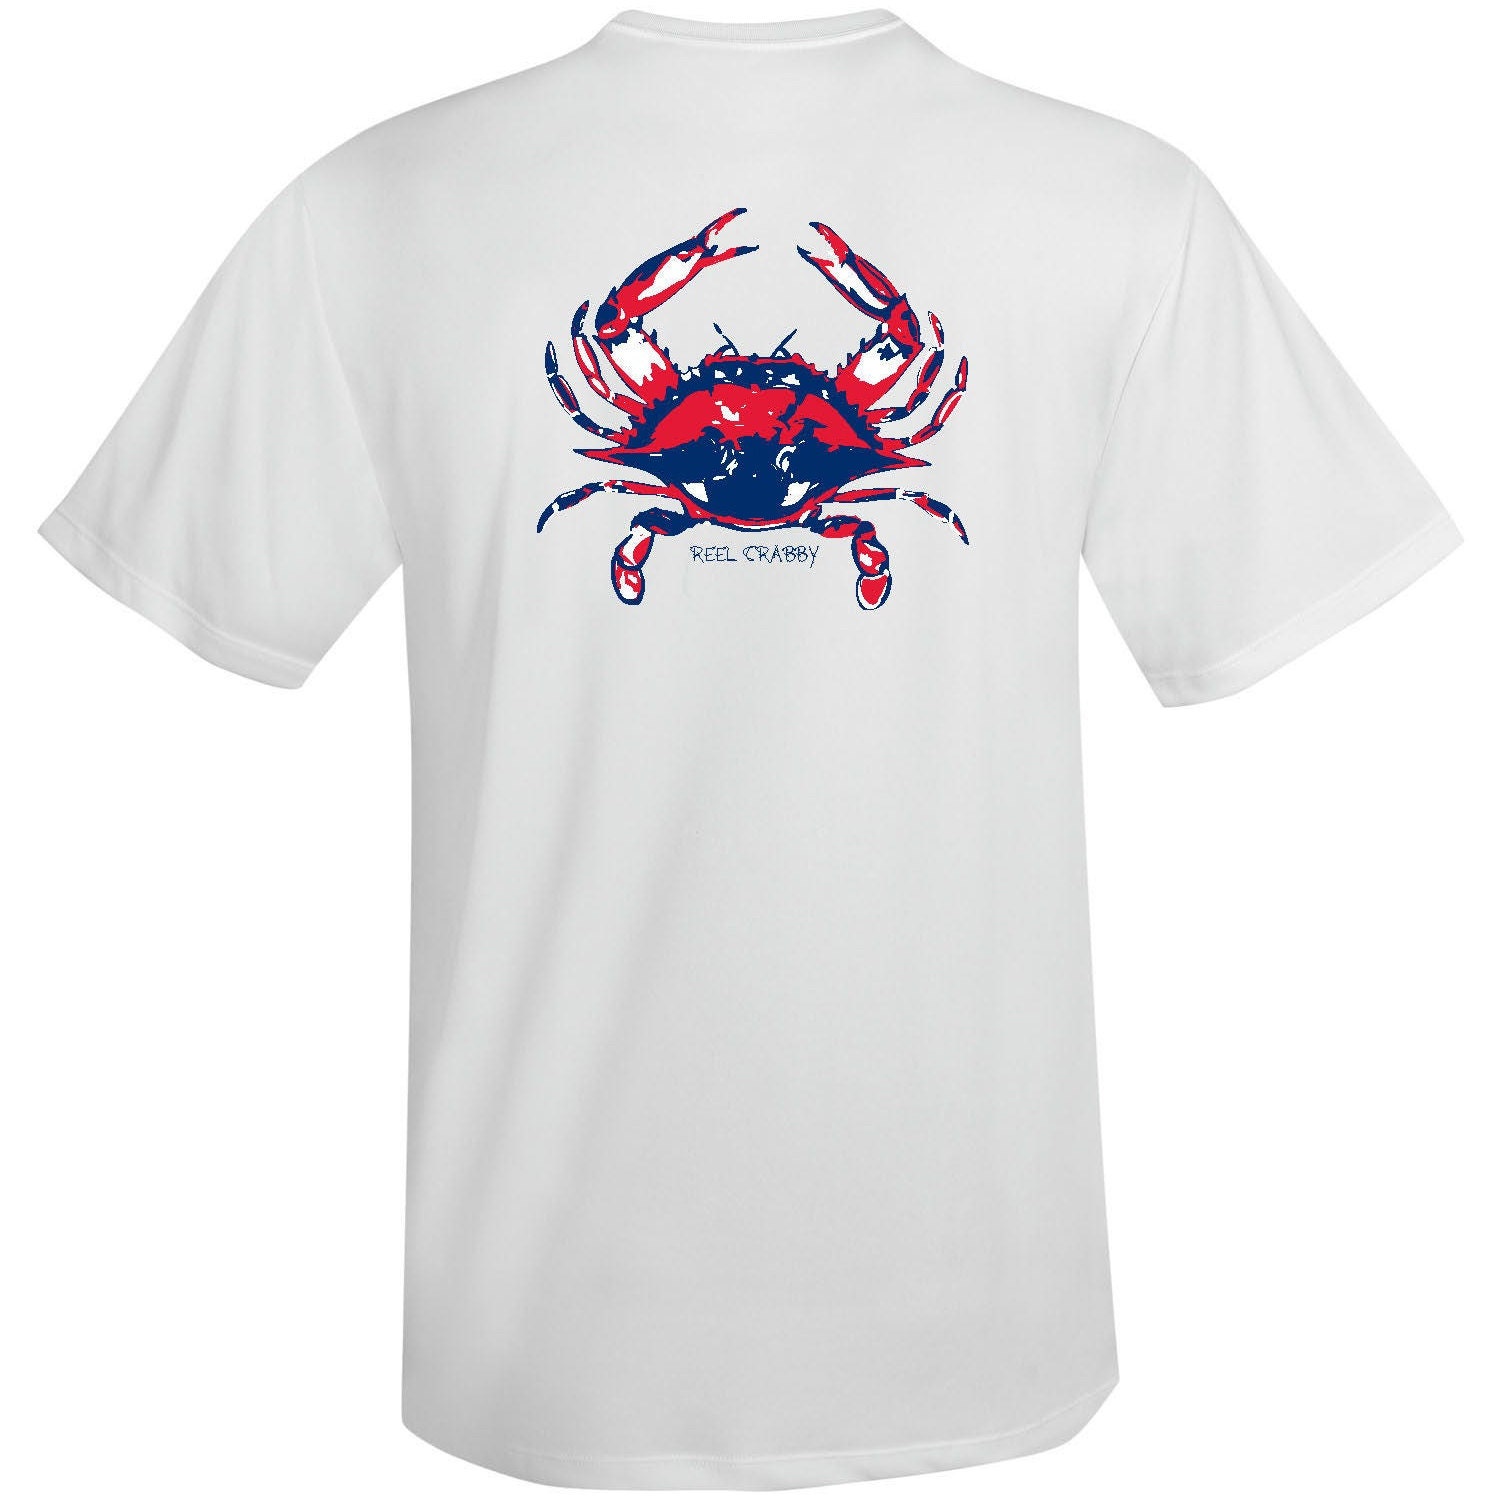 Blue Crab Performance Shirts, Crab UV Sun Shirts, Men's Performance Fishing Shirts, Ladies Crab Shirts, SPF Fishing Shirts, Maryland Crab